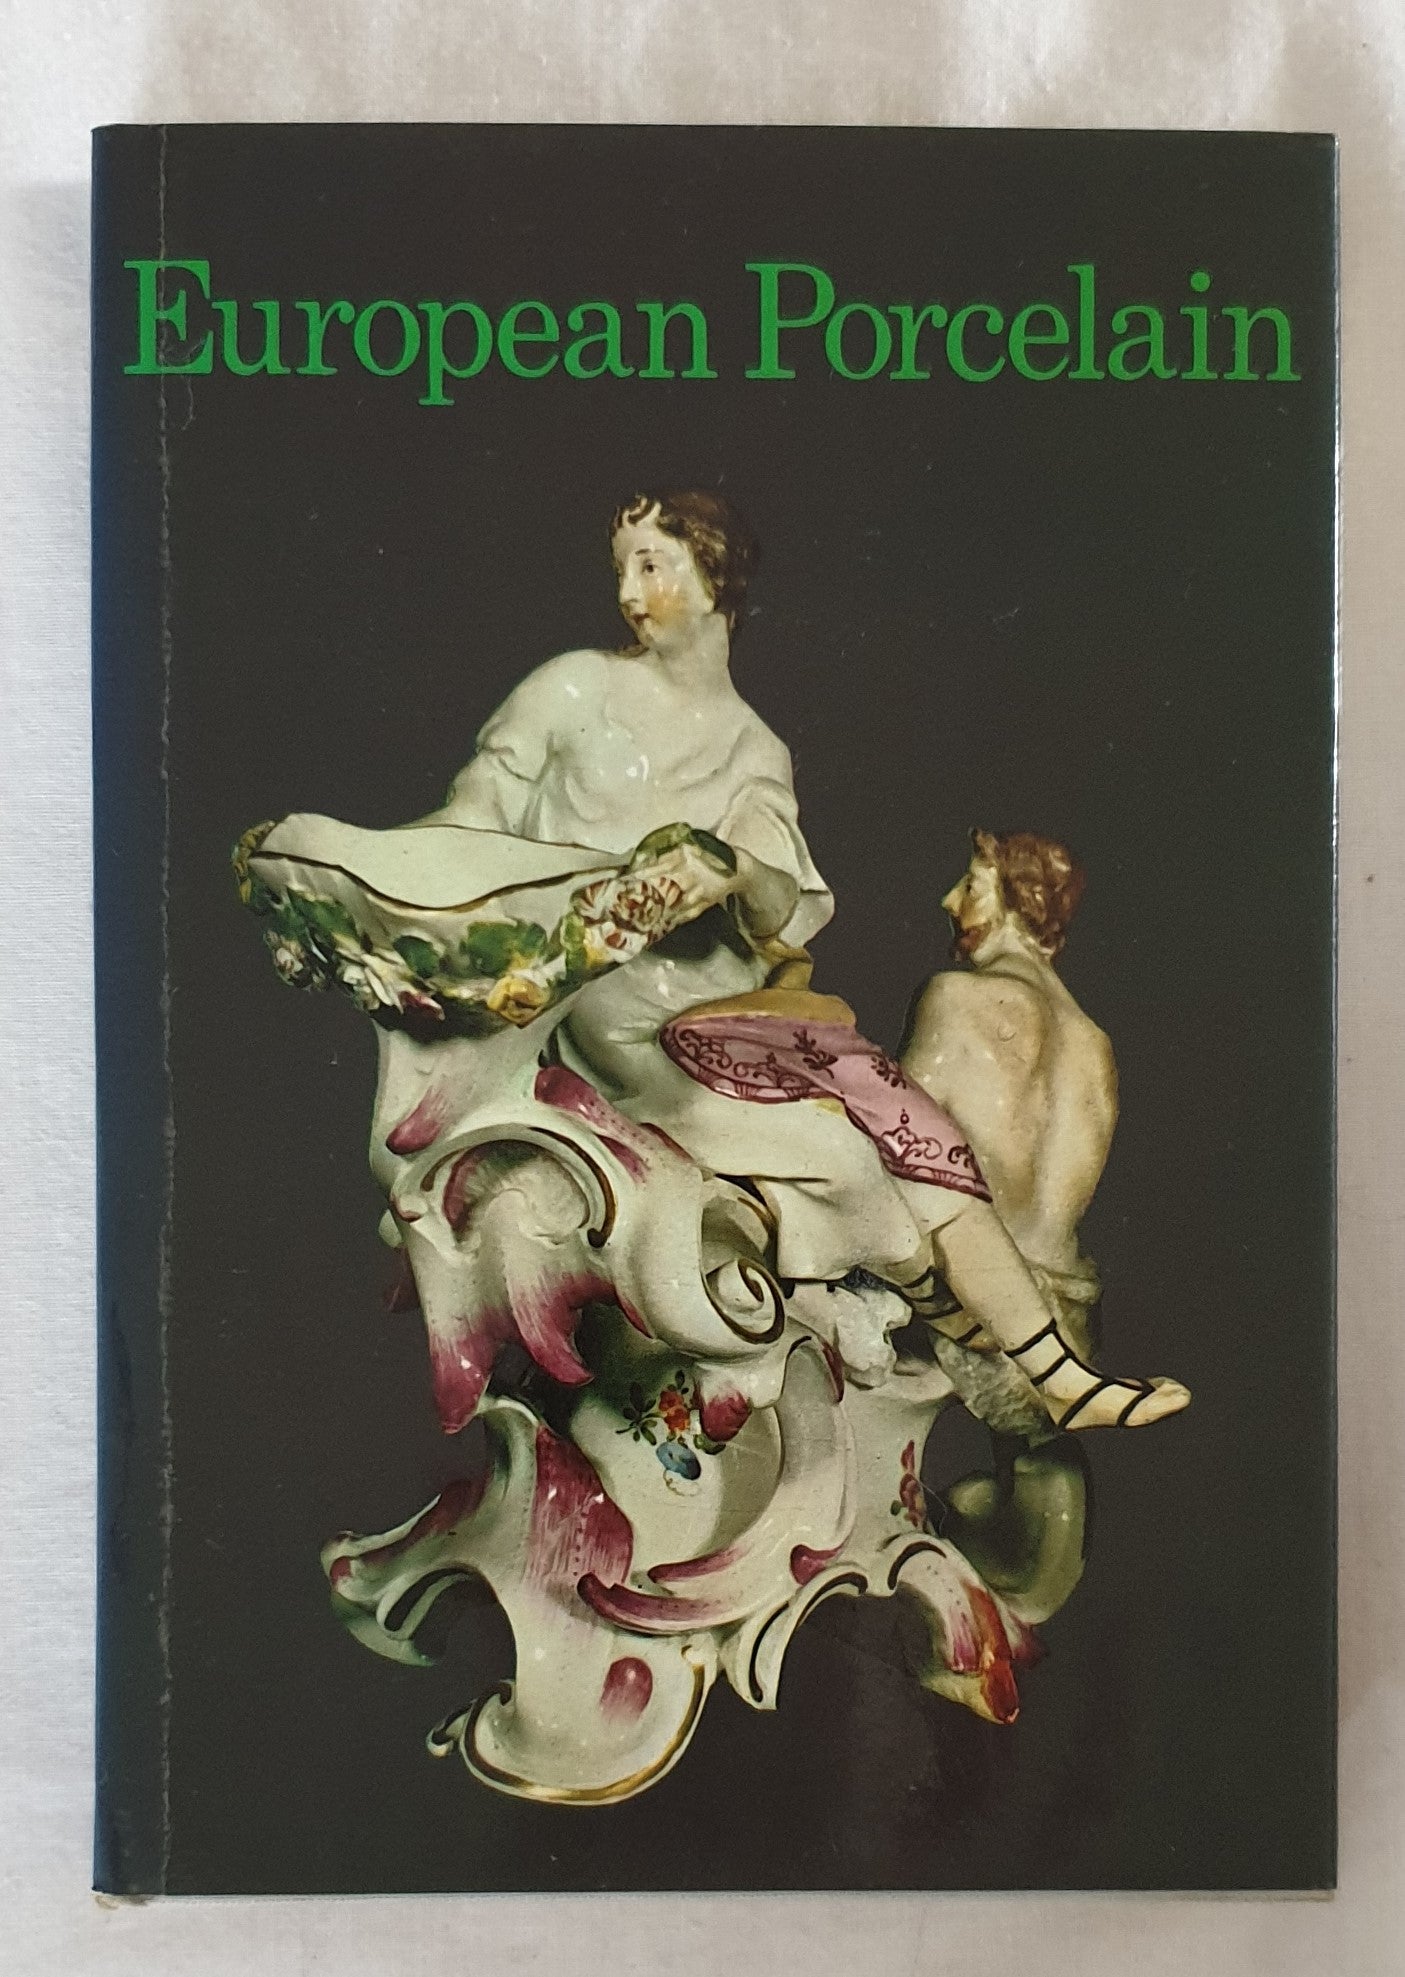 European Porcelain by Mina Bacci